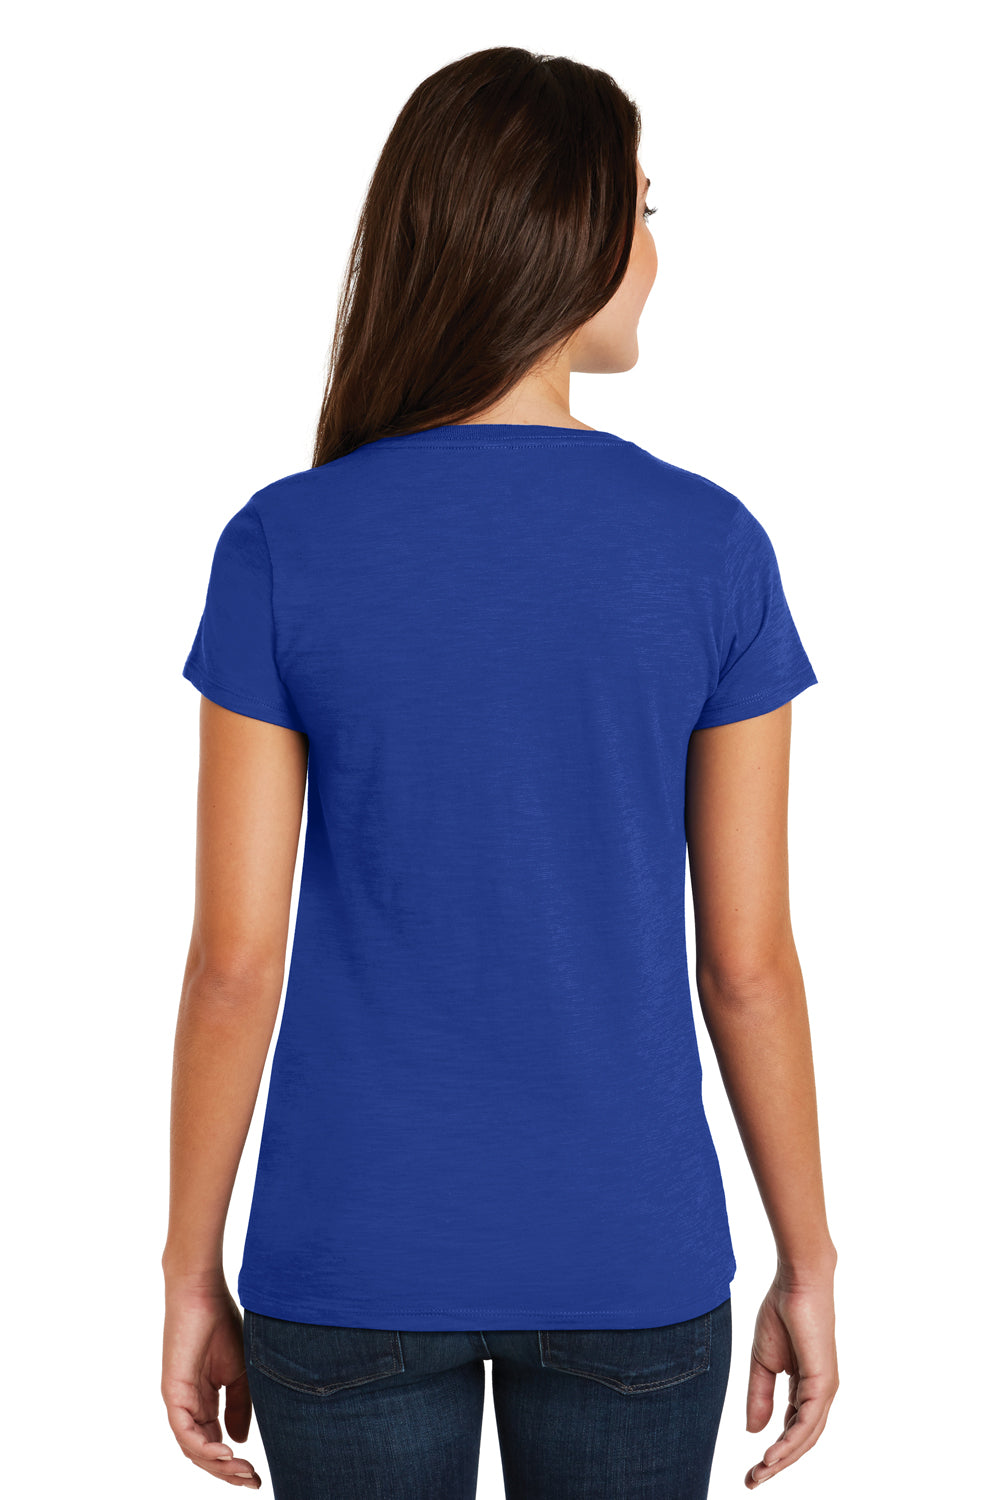 District DM3501 Womens Super Slub Short Sleeve V-Neck T-Shirt Royal Blue Back